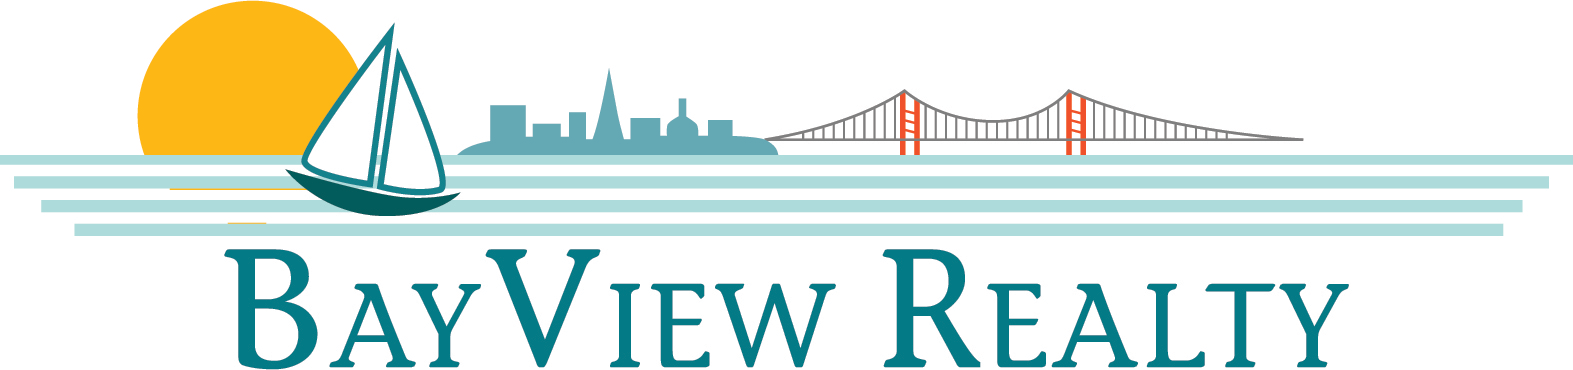 Bayview Realty Logo